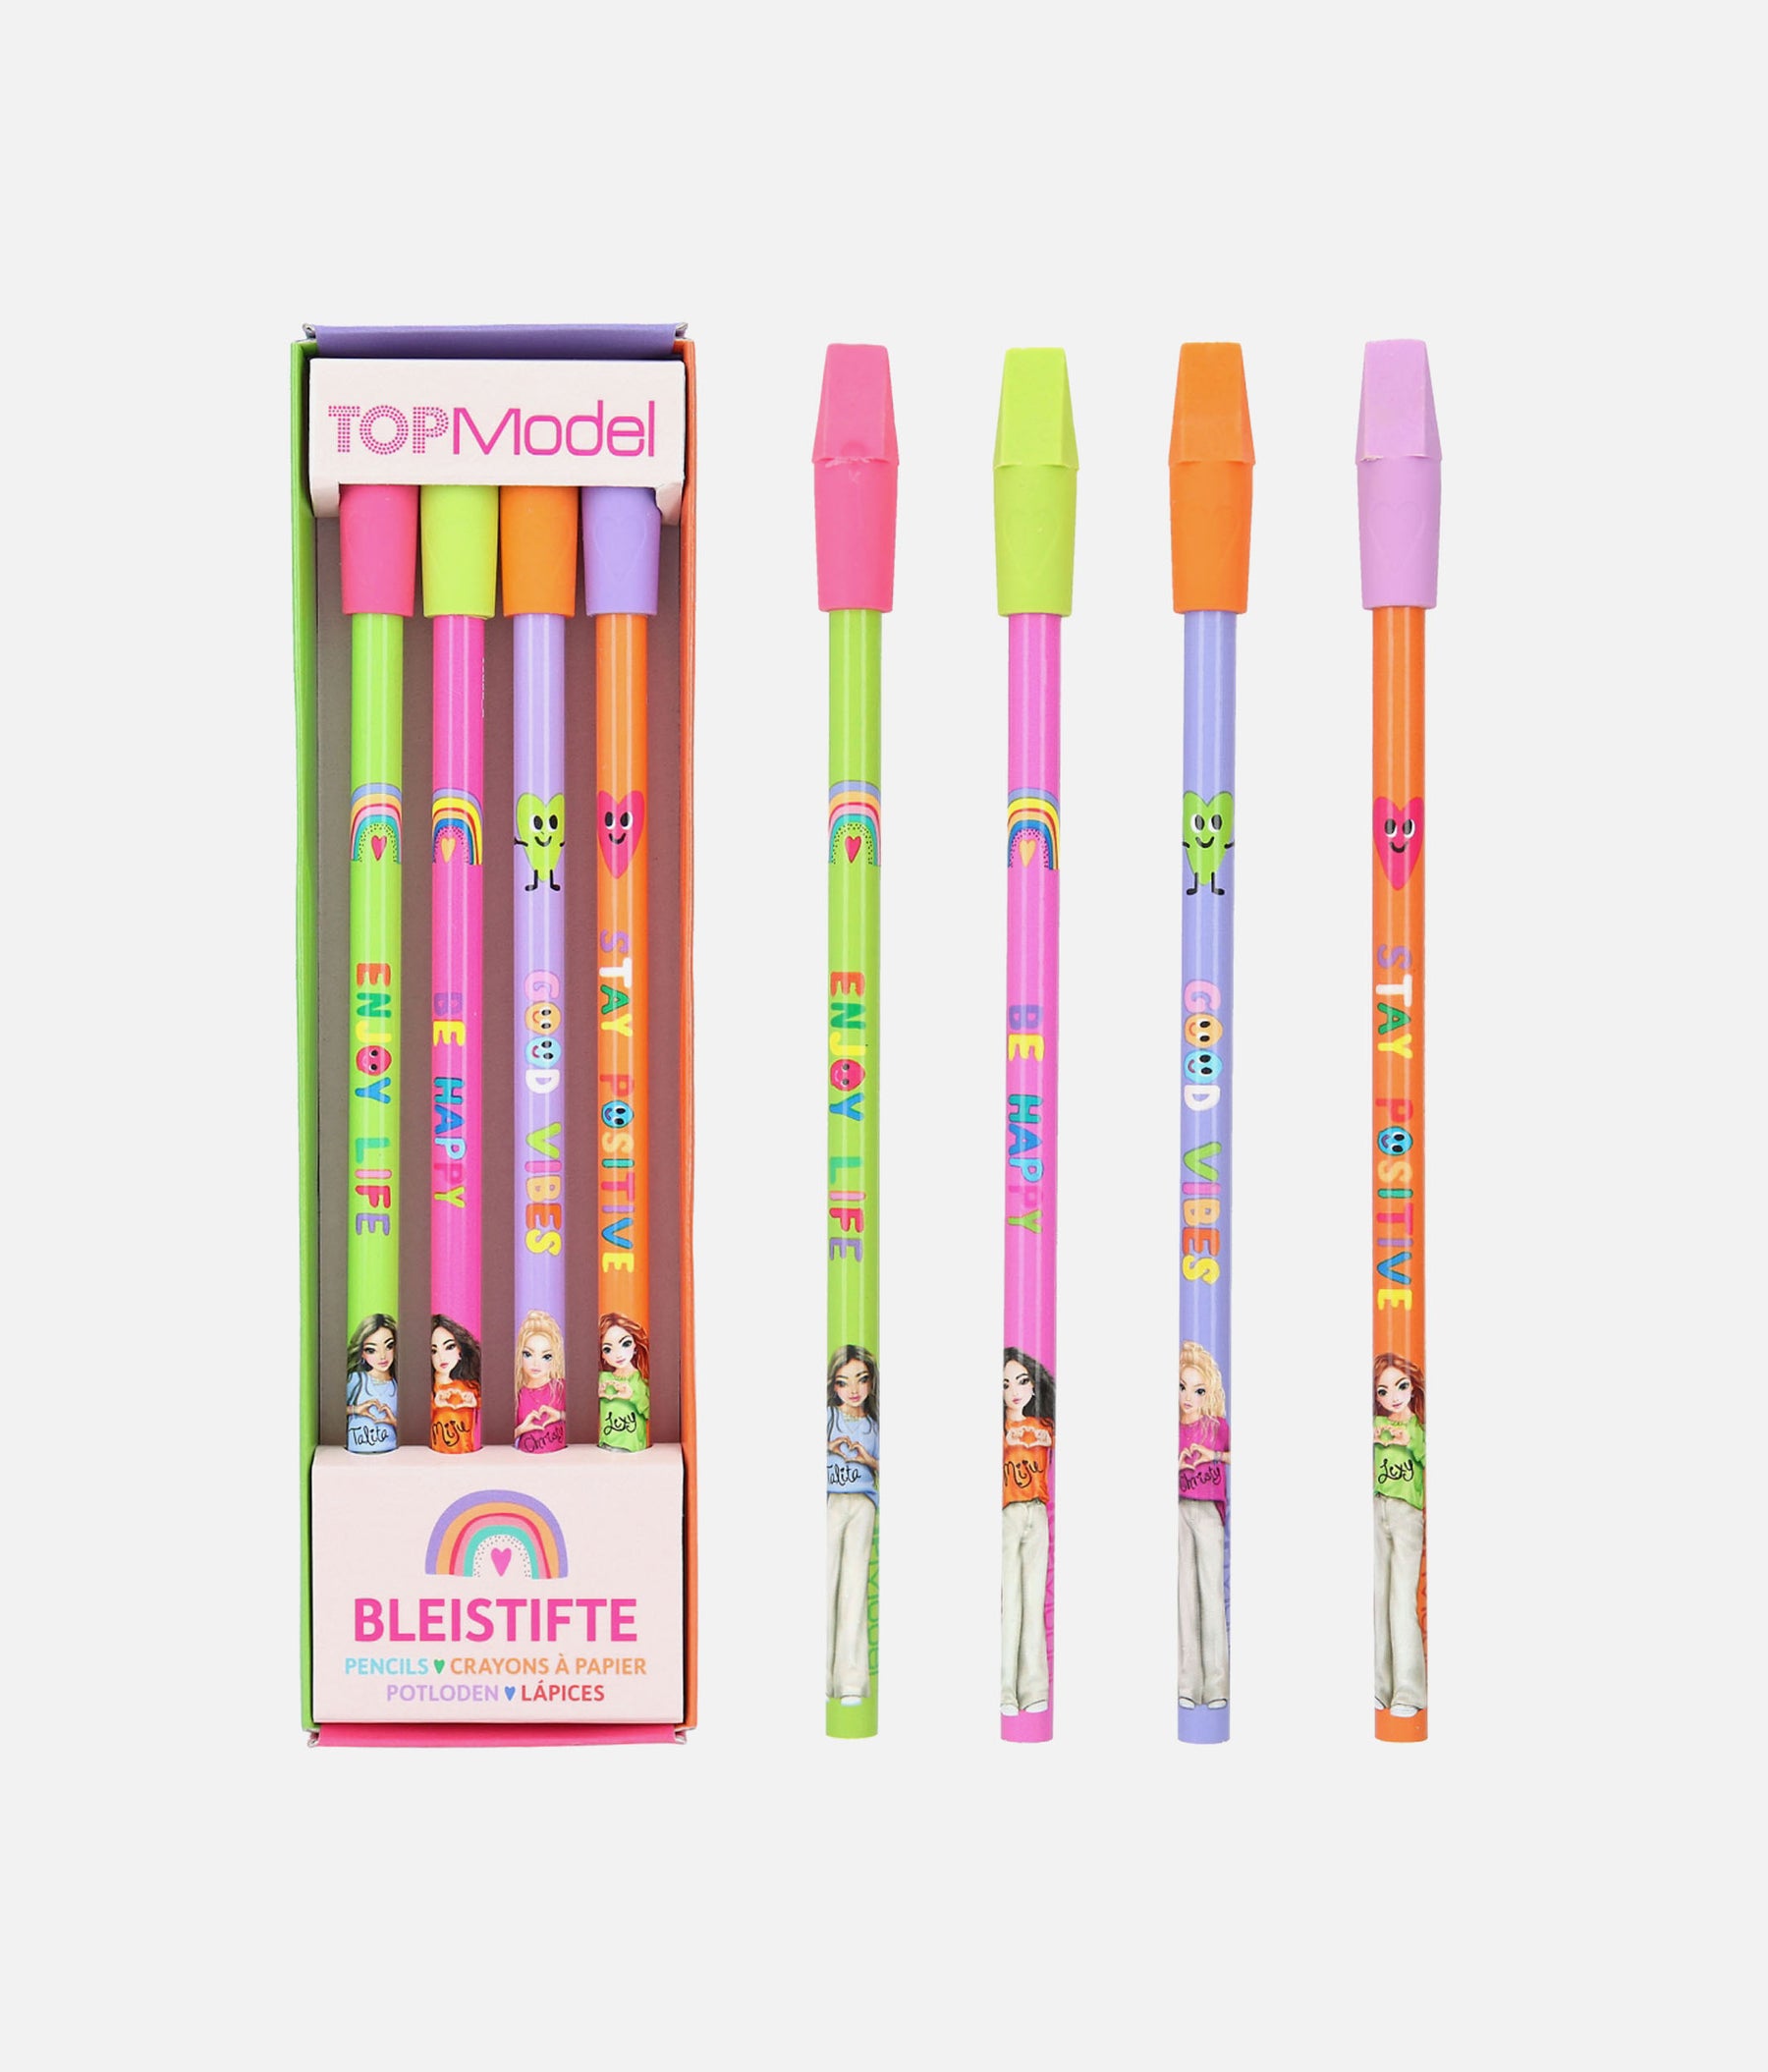 Pencil-Set With Eraser-Topper - 0012088